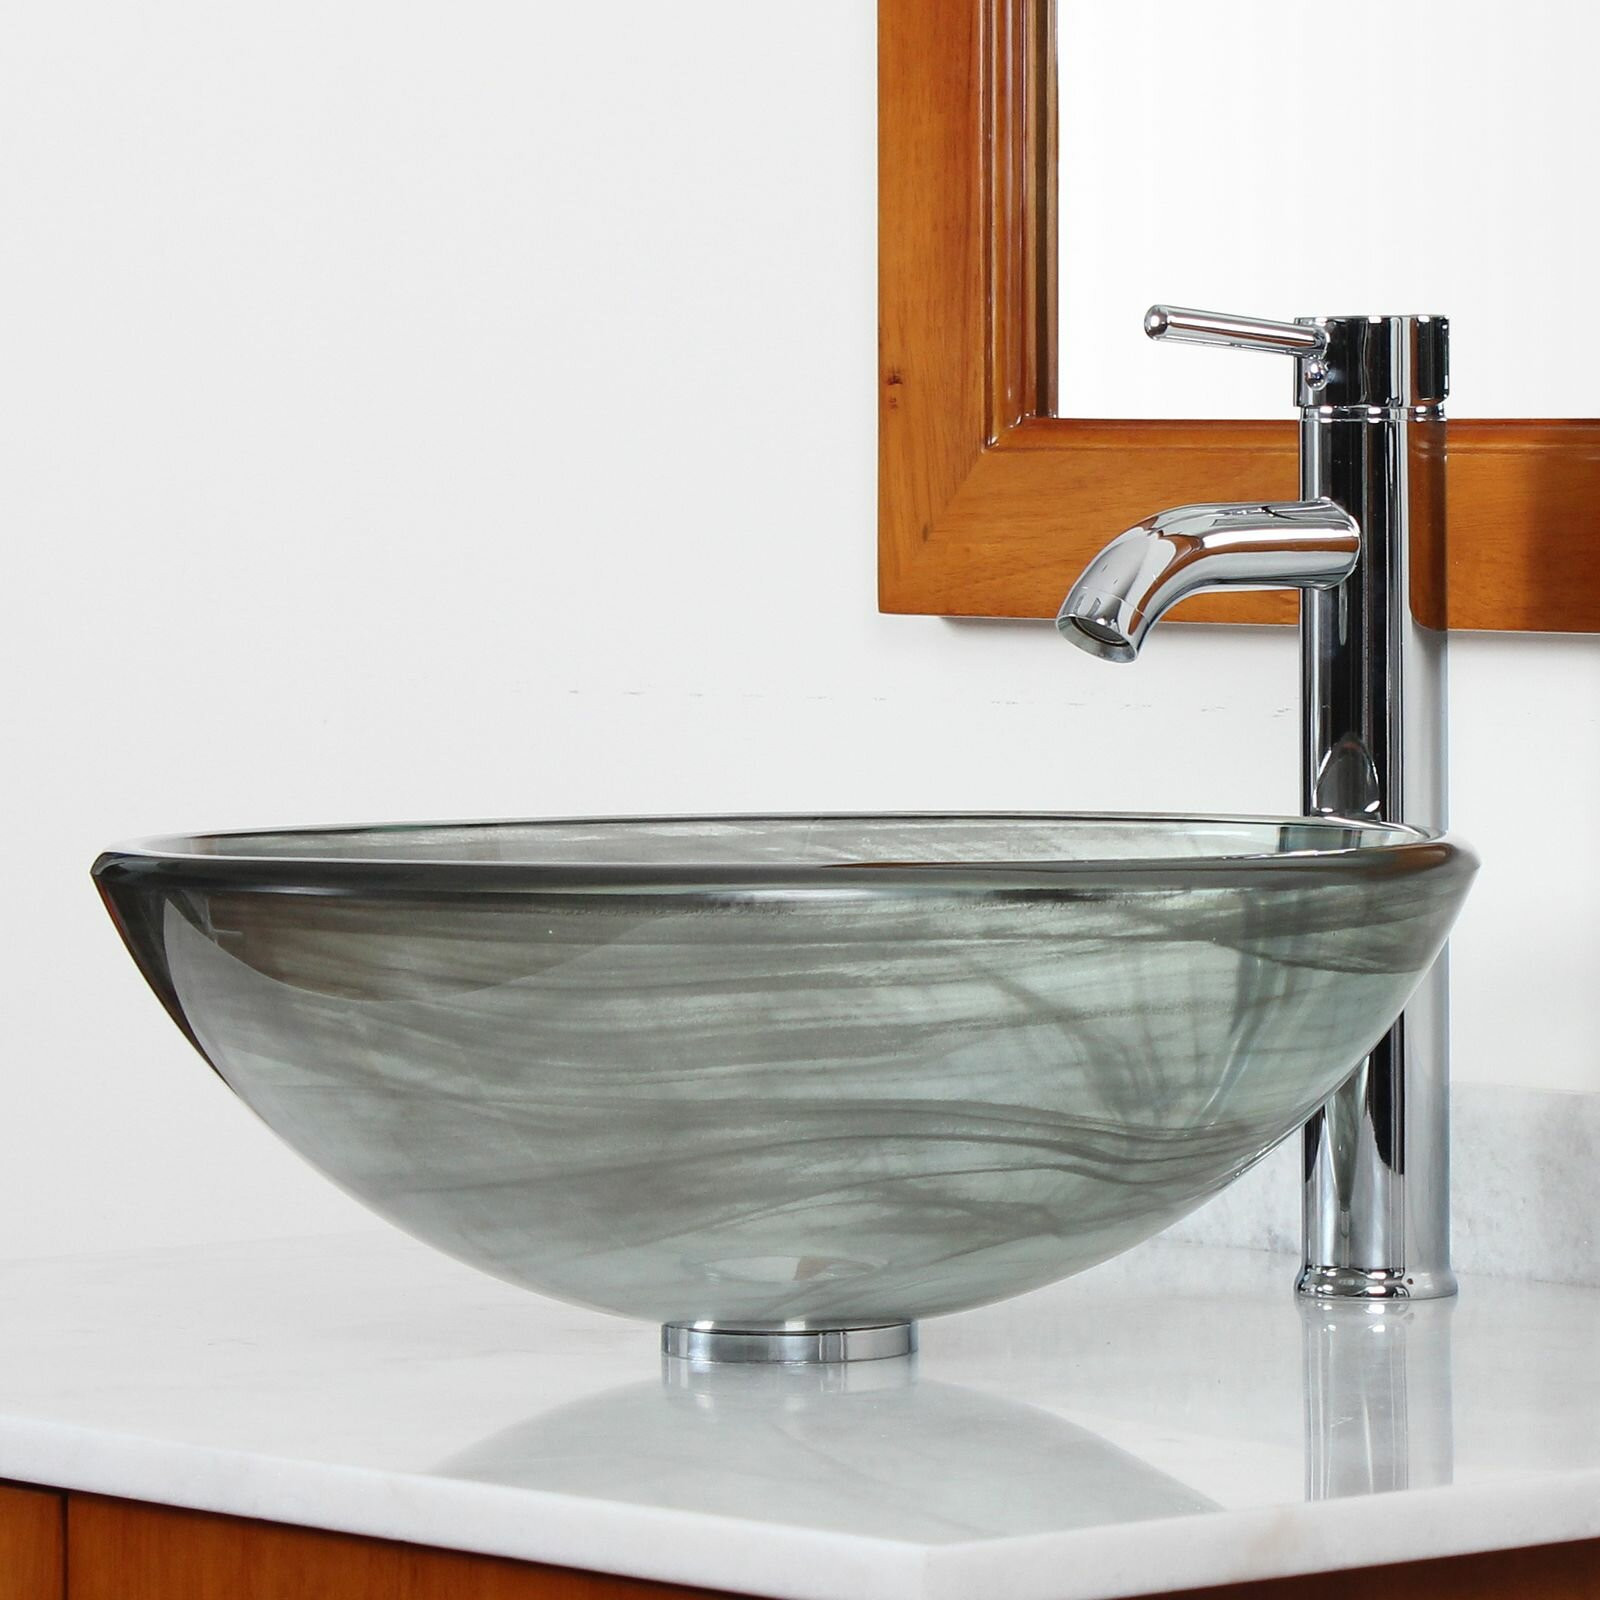 Bathroom Sink Bowls
 Double Layered Tempered Glass Bowl Vessel Bathroom Sink